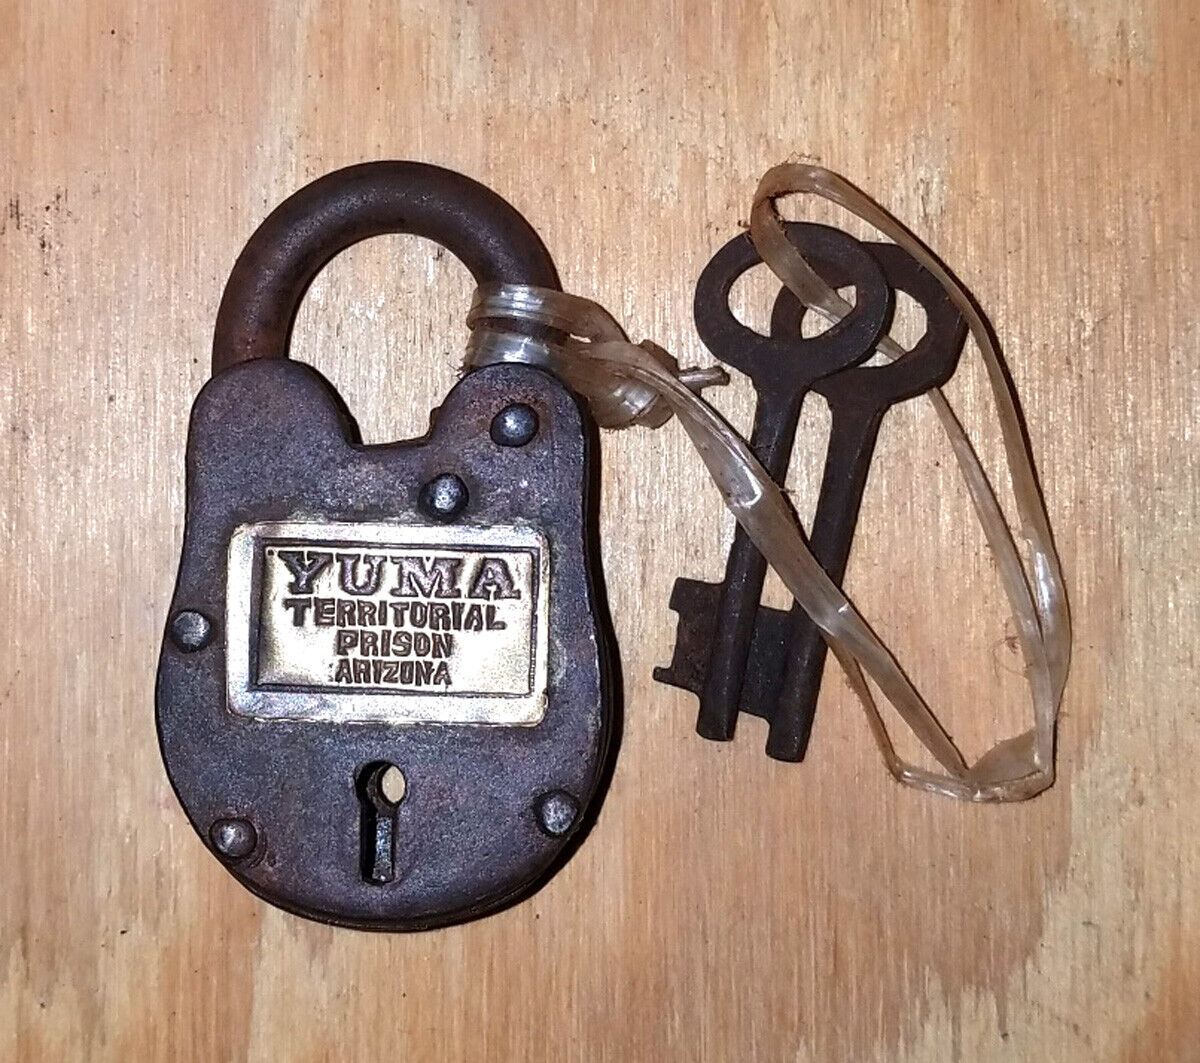 Yuma Territorial Prison Arizona Cast Iron Lock with 2 Keys Rusty Antique Finish 